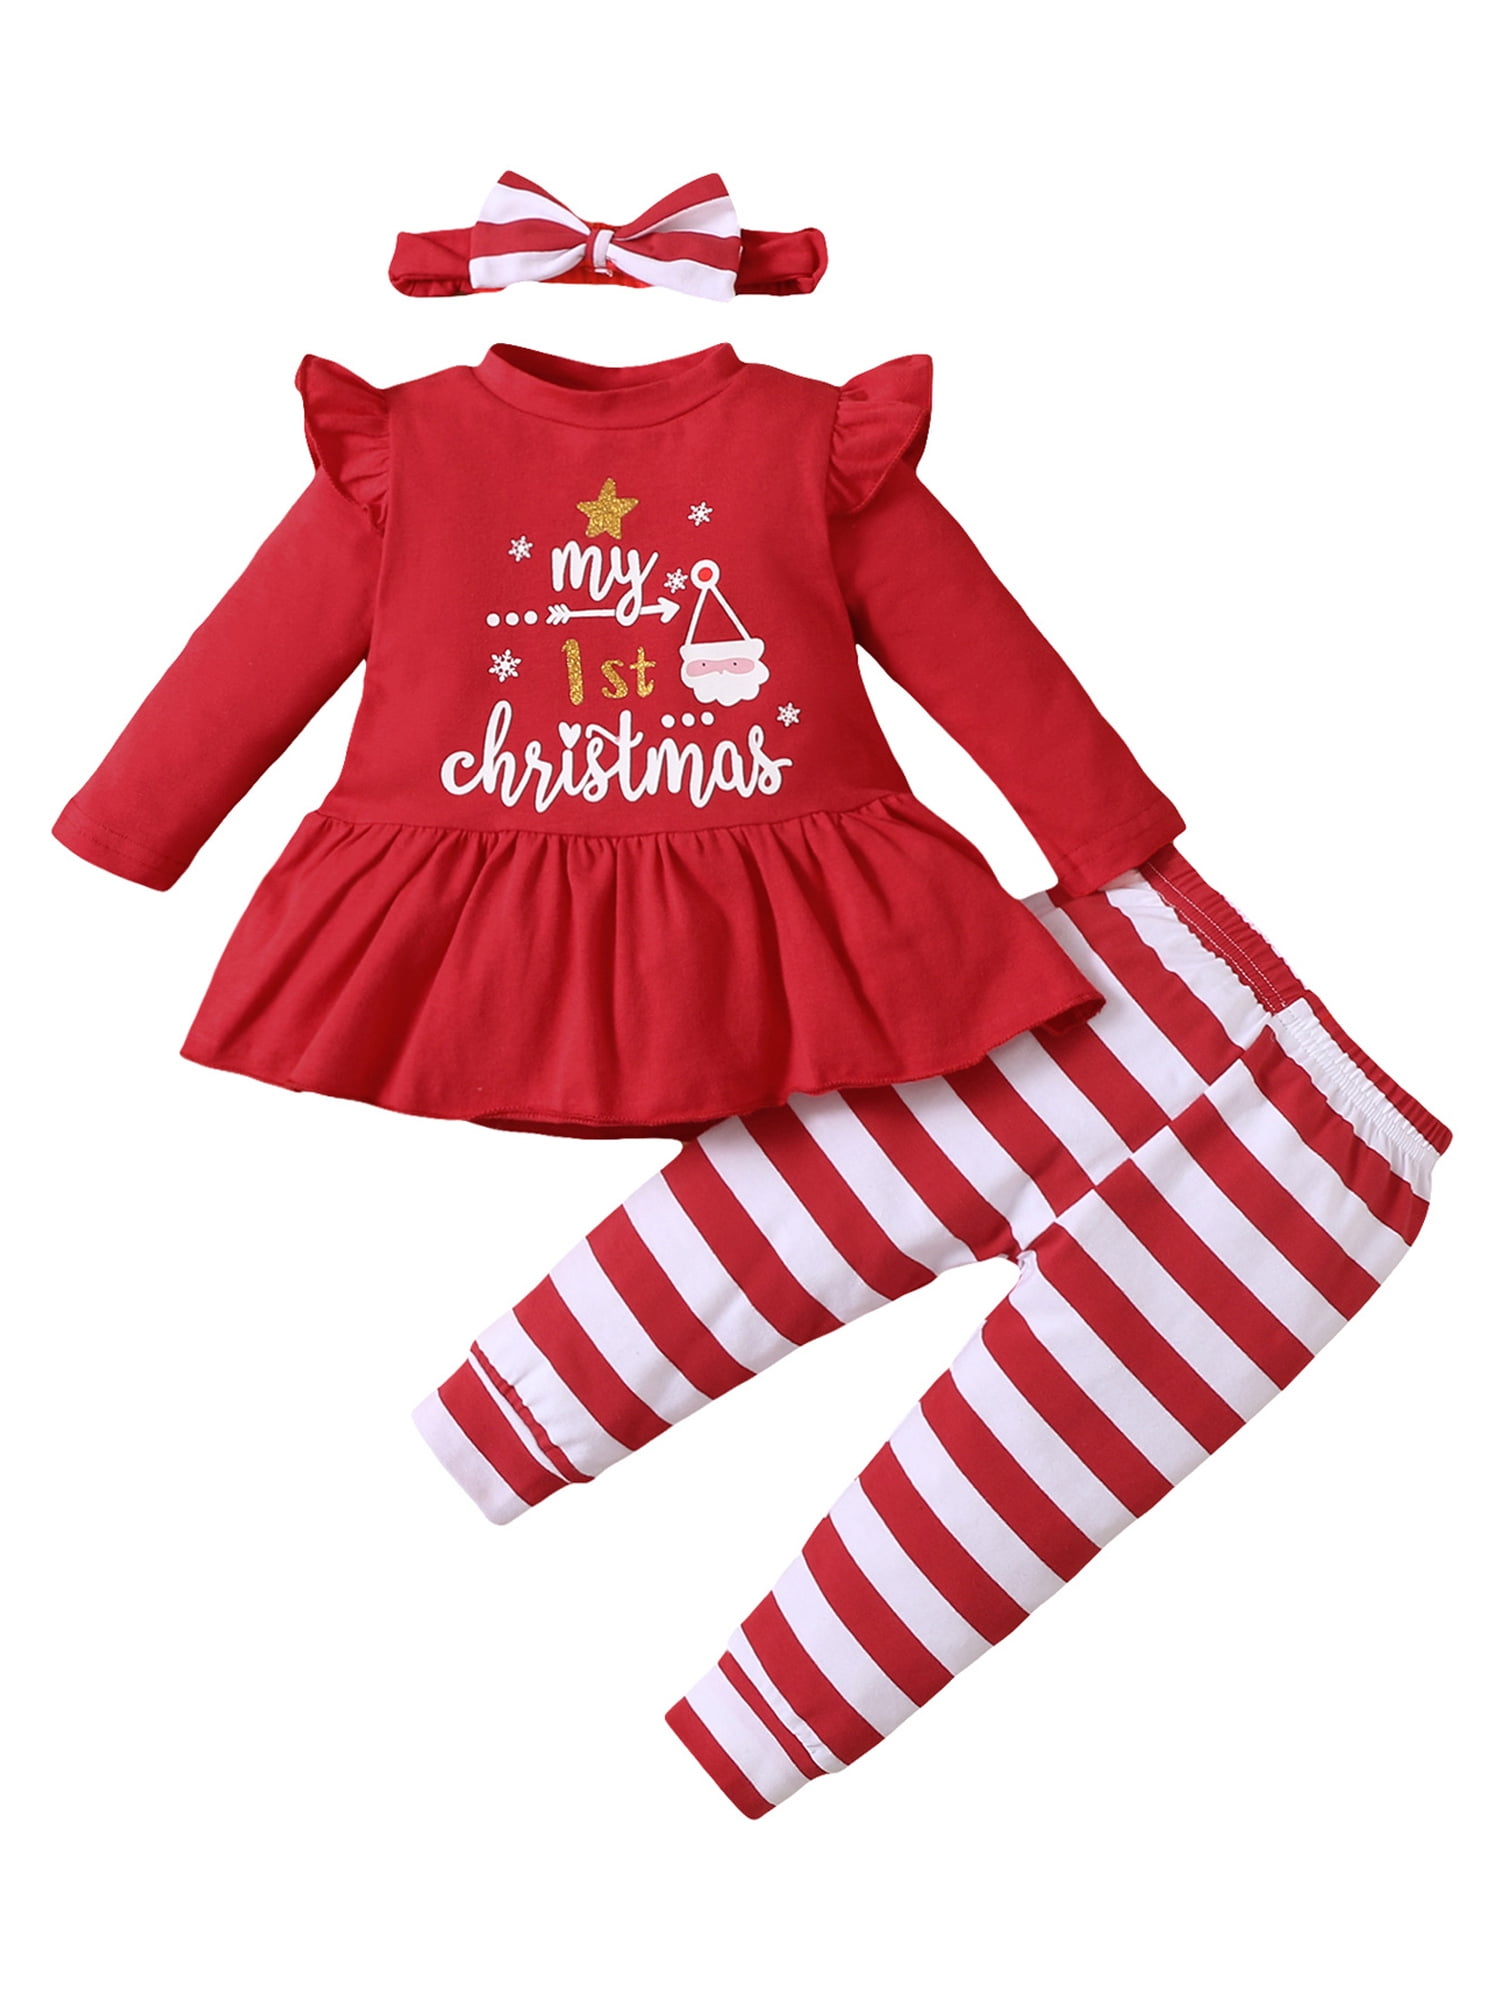 XMAS White Bodysuit Christmas Stick Candy Cane Red White Wave Baby Dress NB-12M 